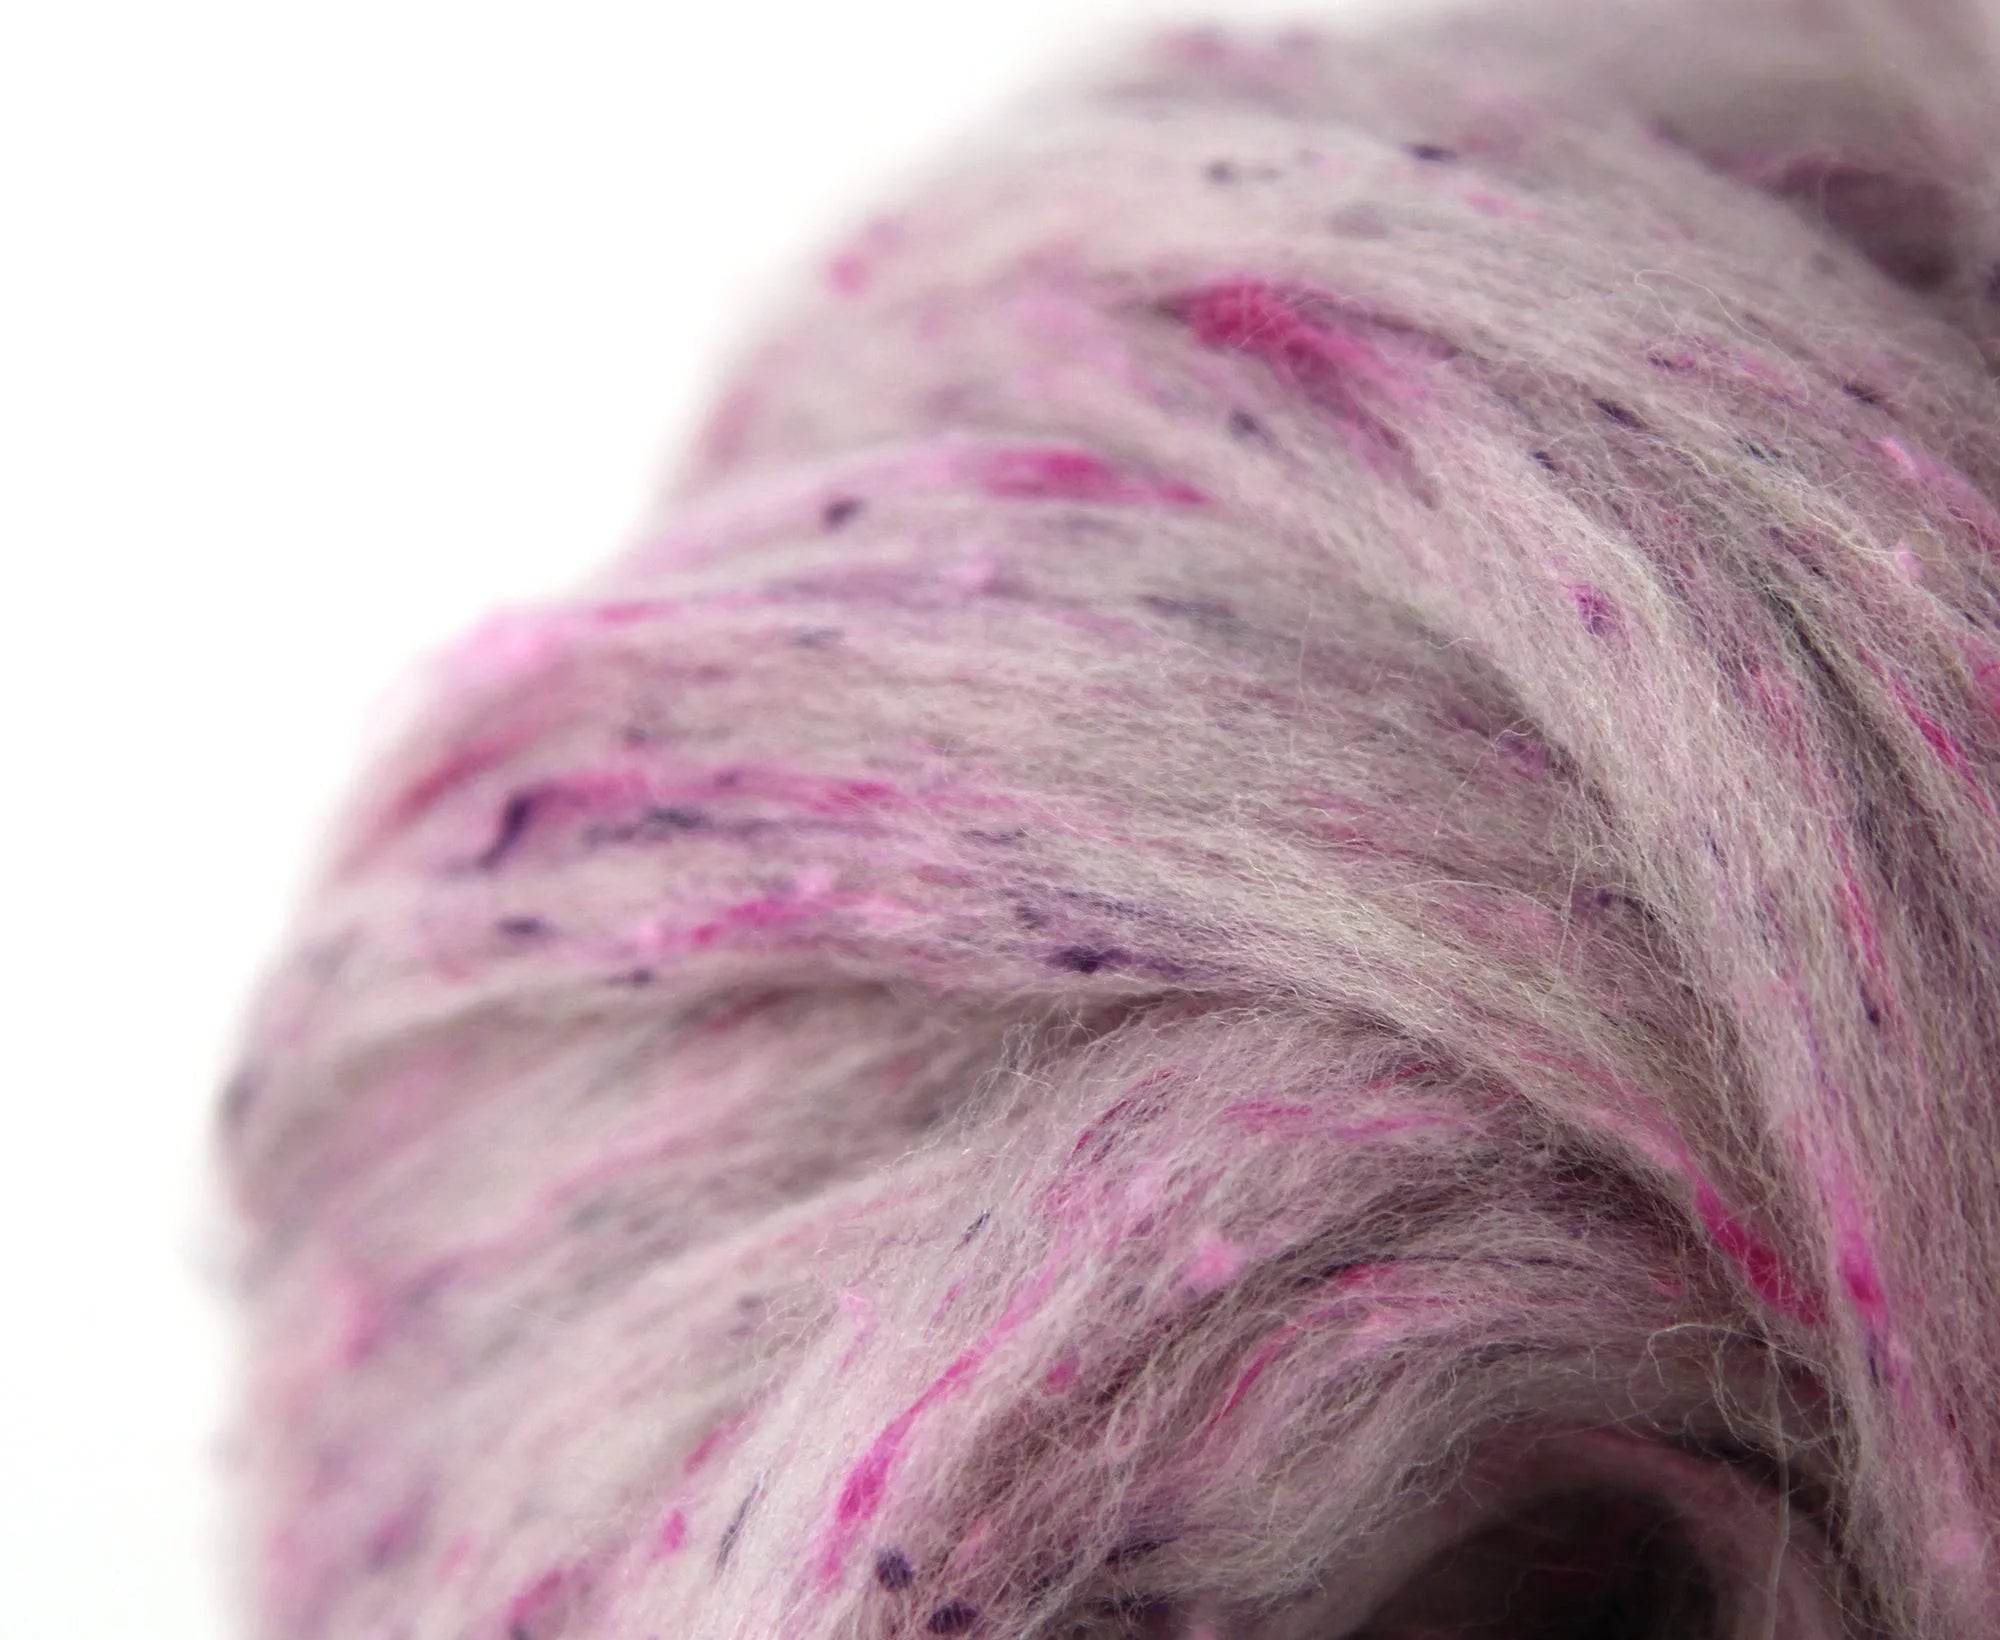 Maypole Pink Tweed Top - World of Wool